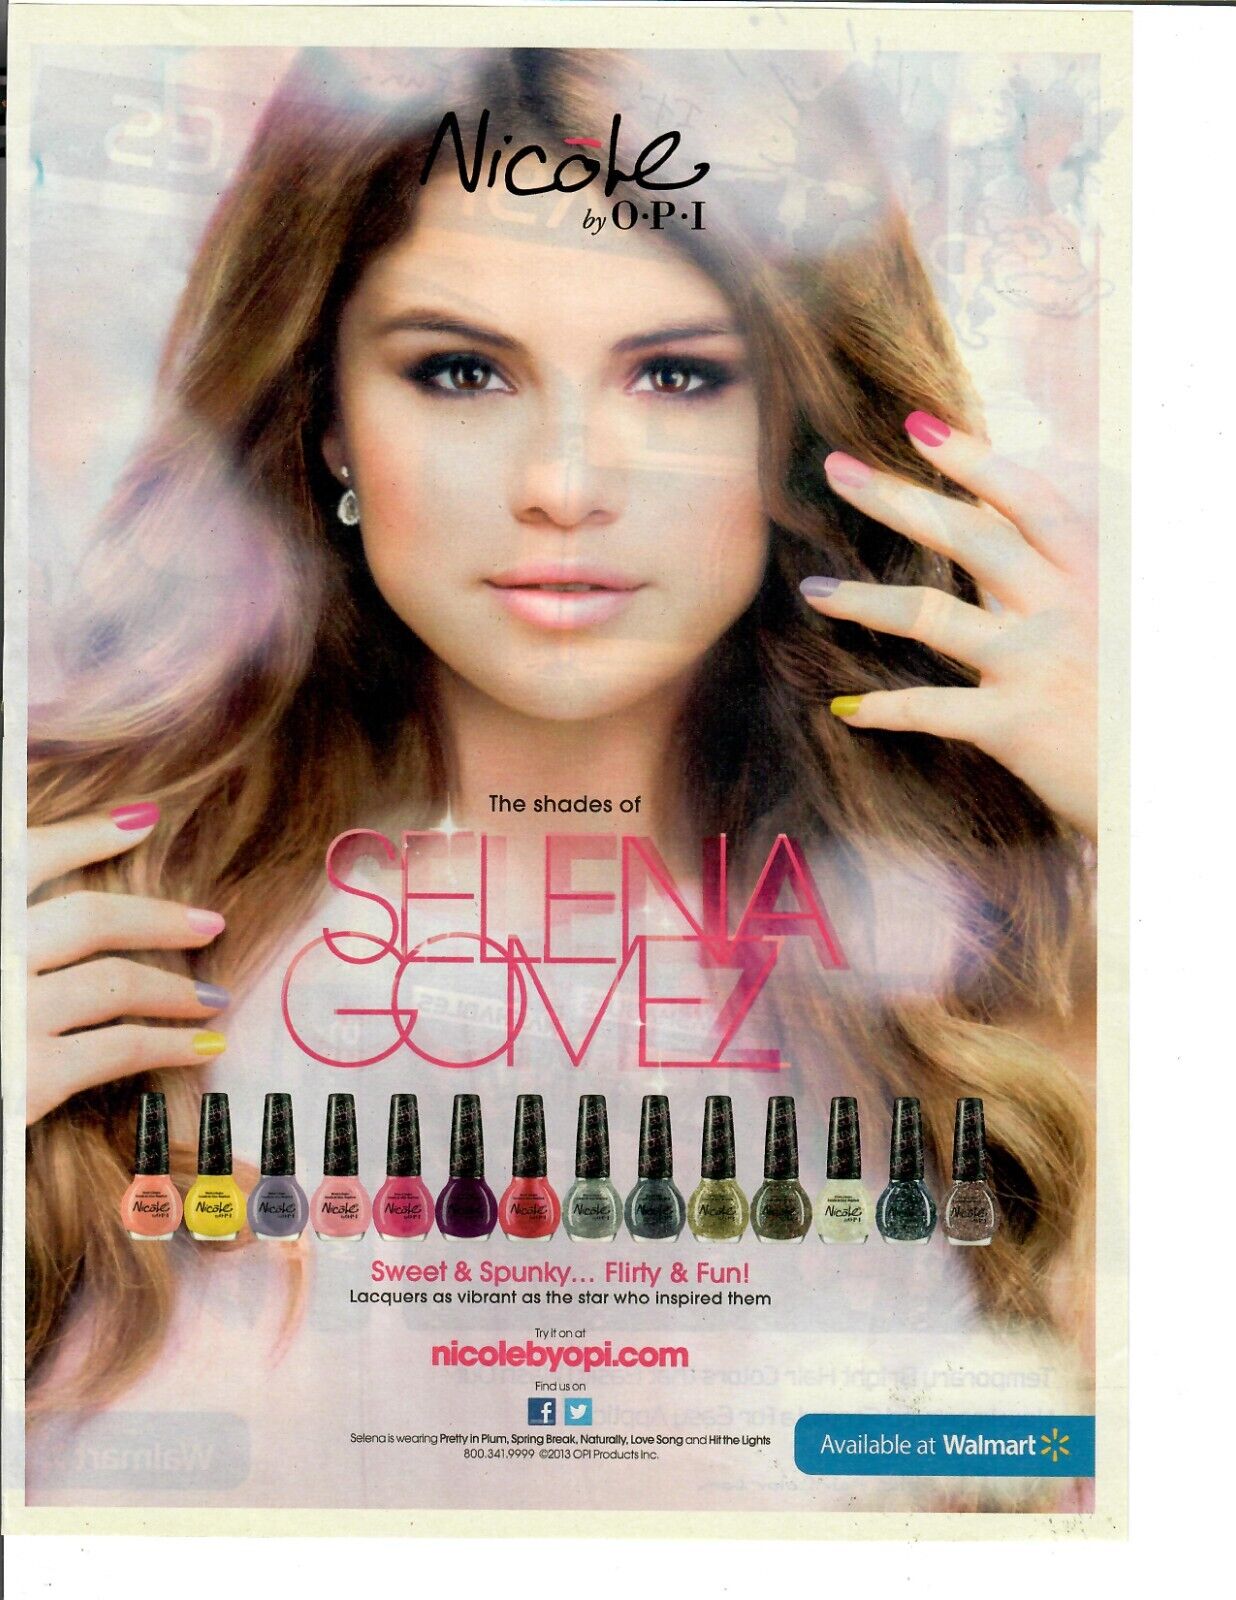 2013 Nicole by OPI Original Magazine Print Ad Nail Polish Colors of Selena Gomez